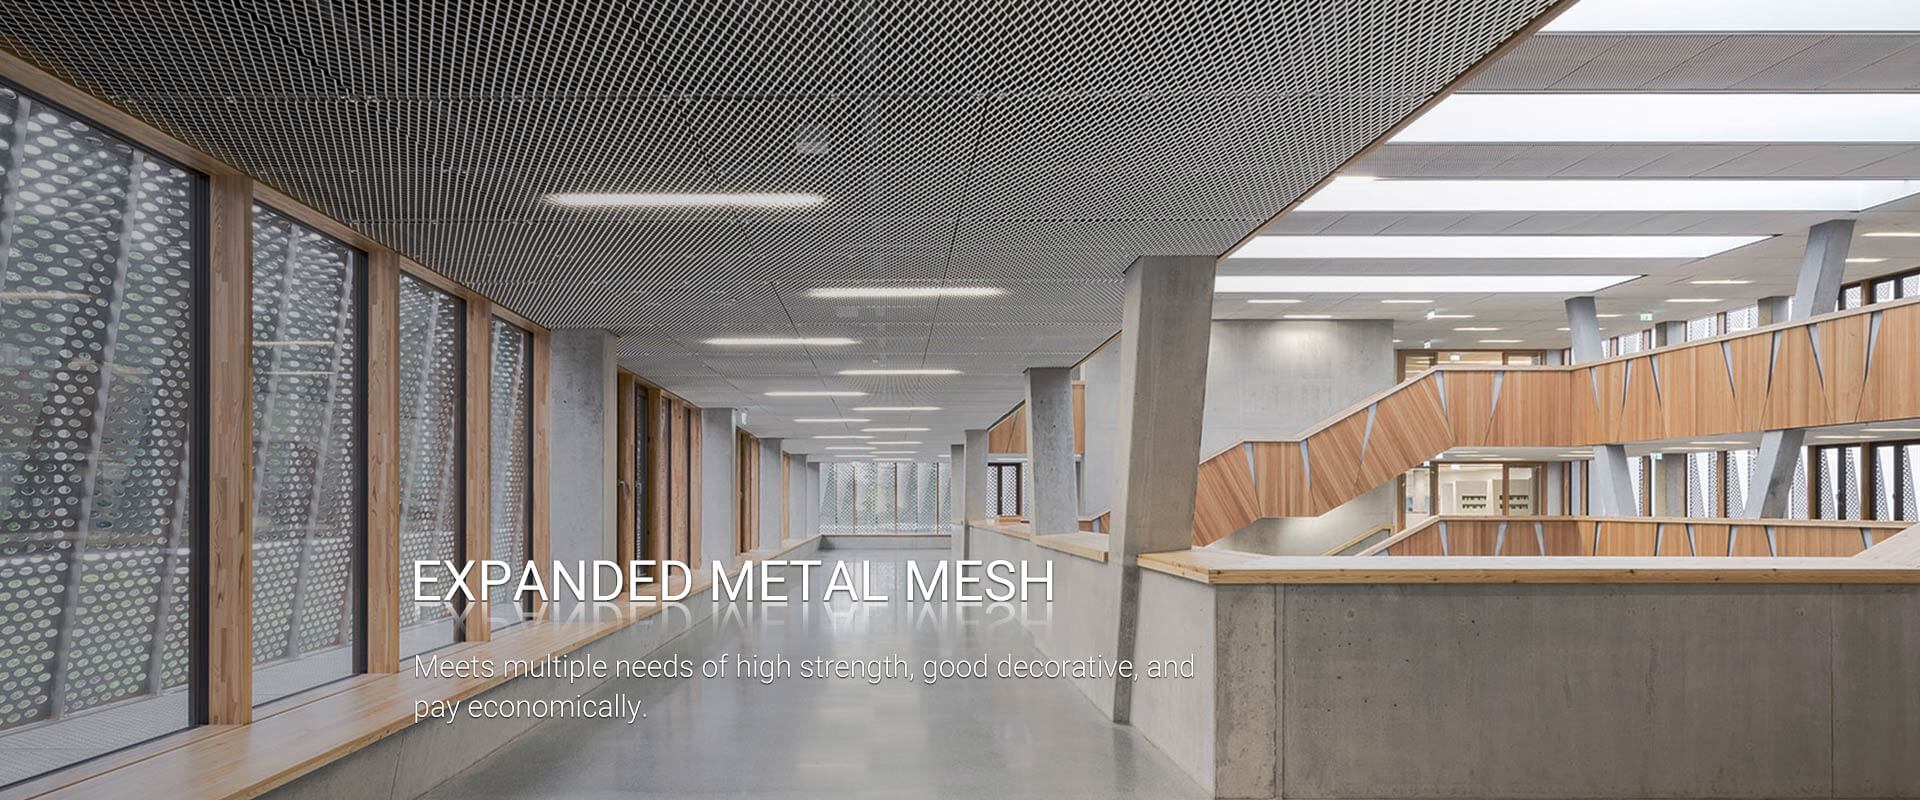 Expanded Metal Mesh